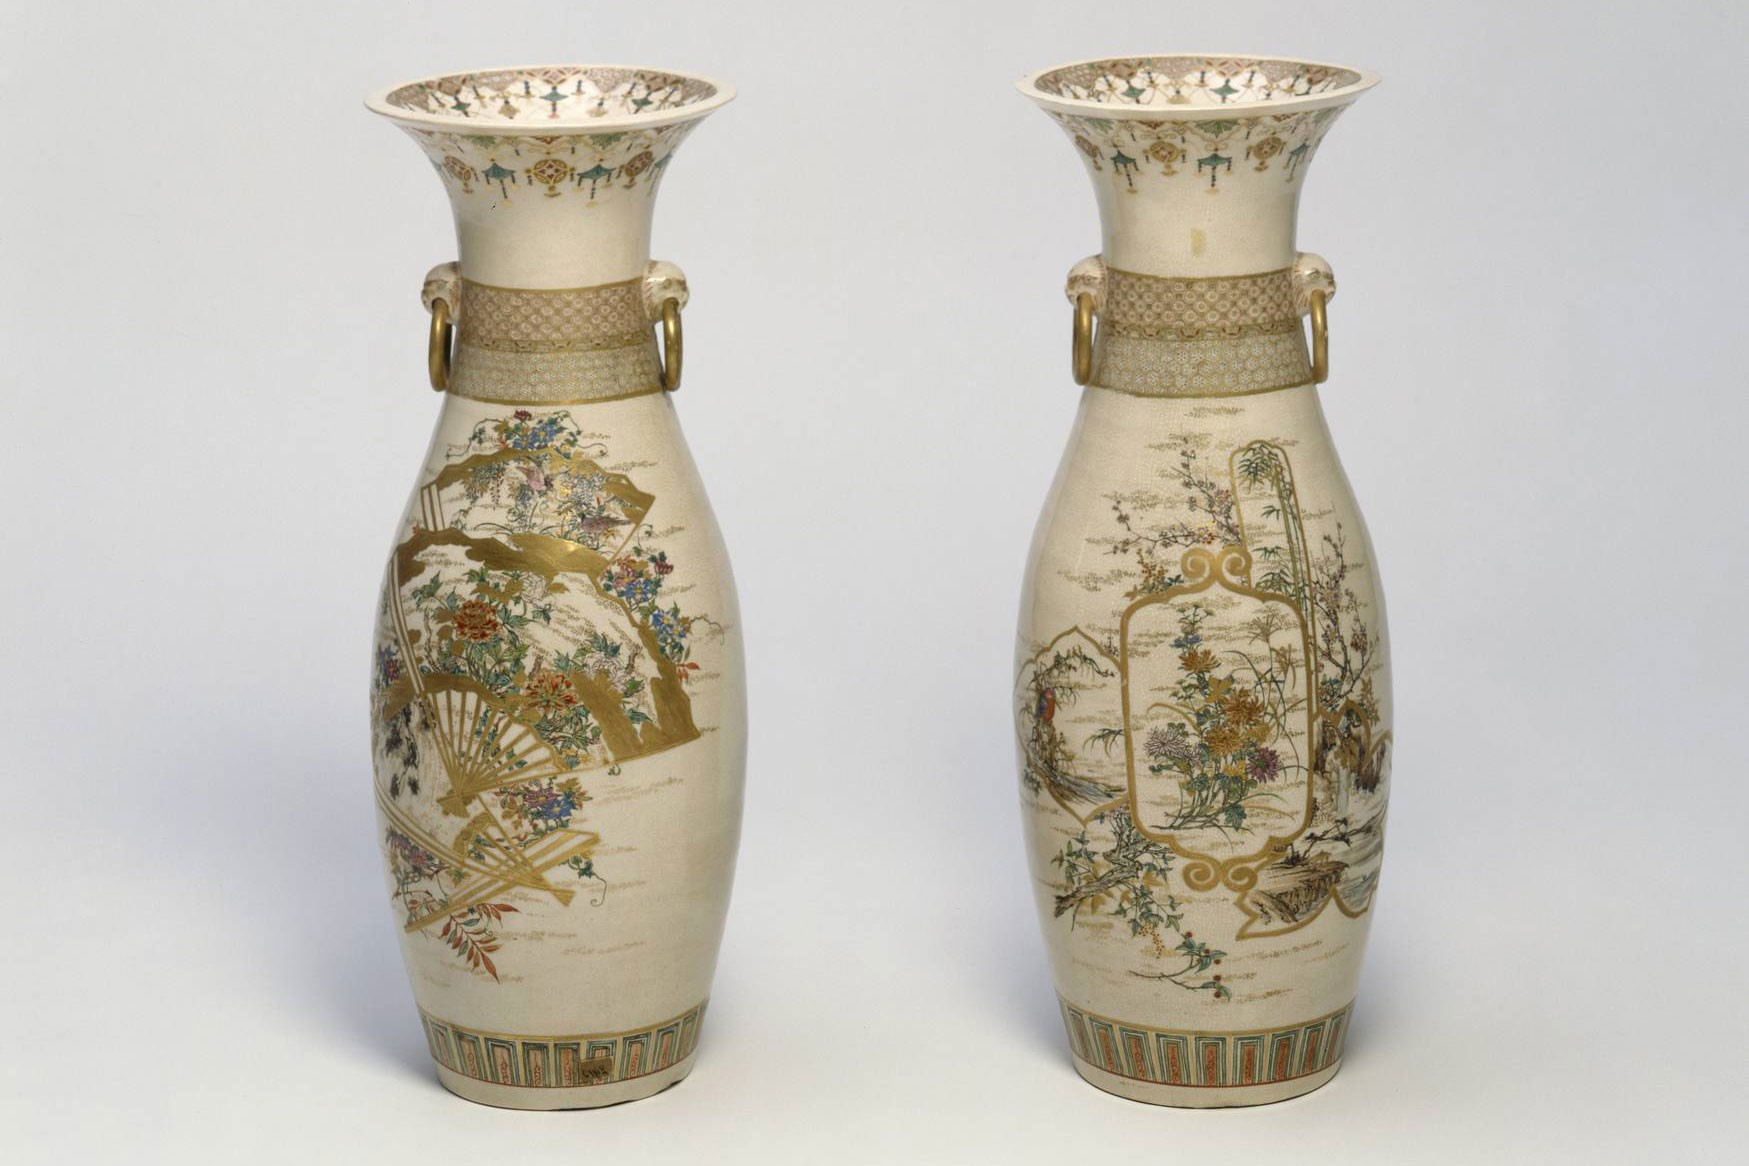 Two vases